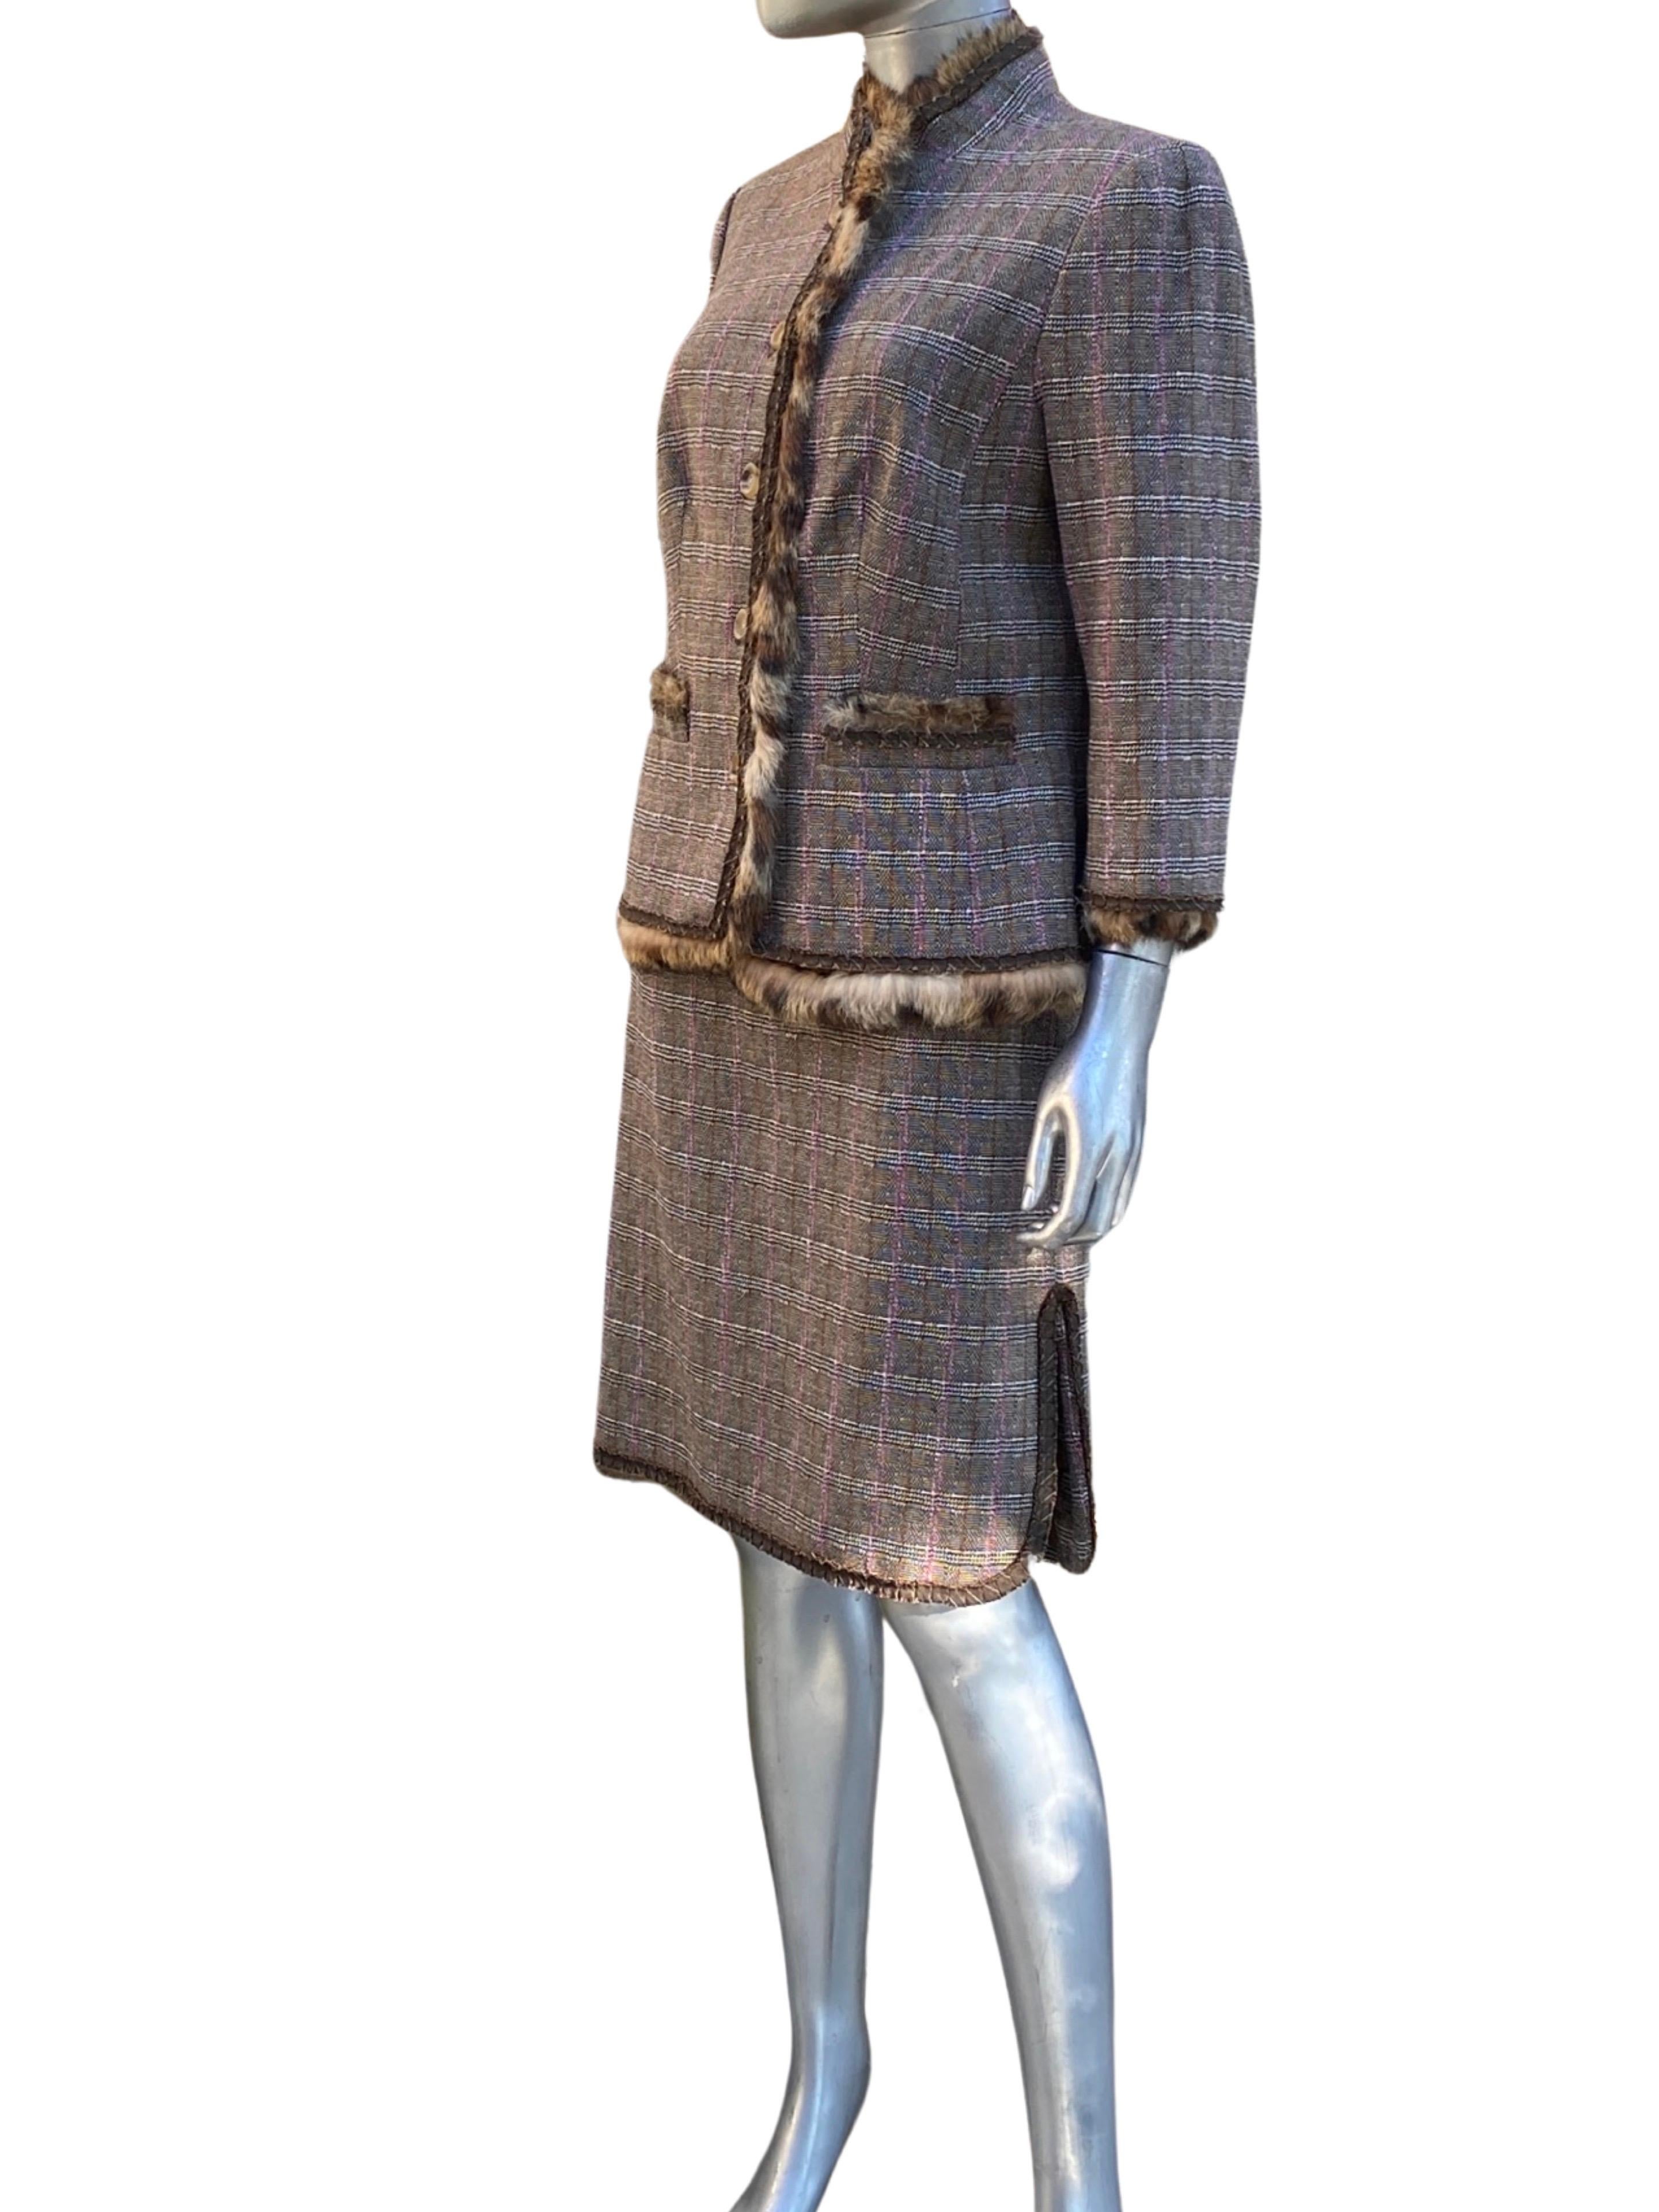 Women's Worth New York Chic Brown/Lilac Plaid Suit w/  Fur Trim Jacket Size 10/12 For Sale